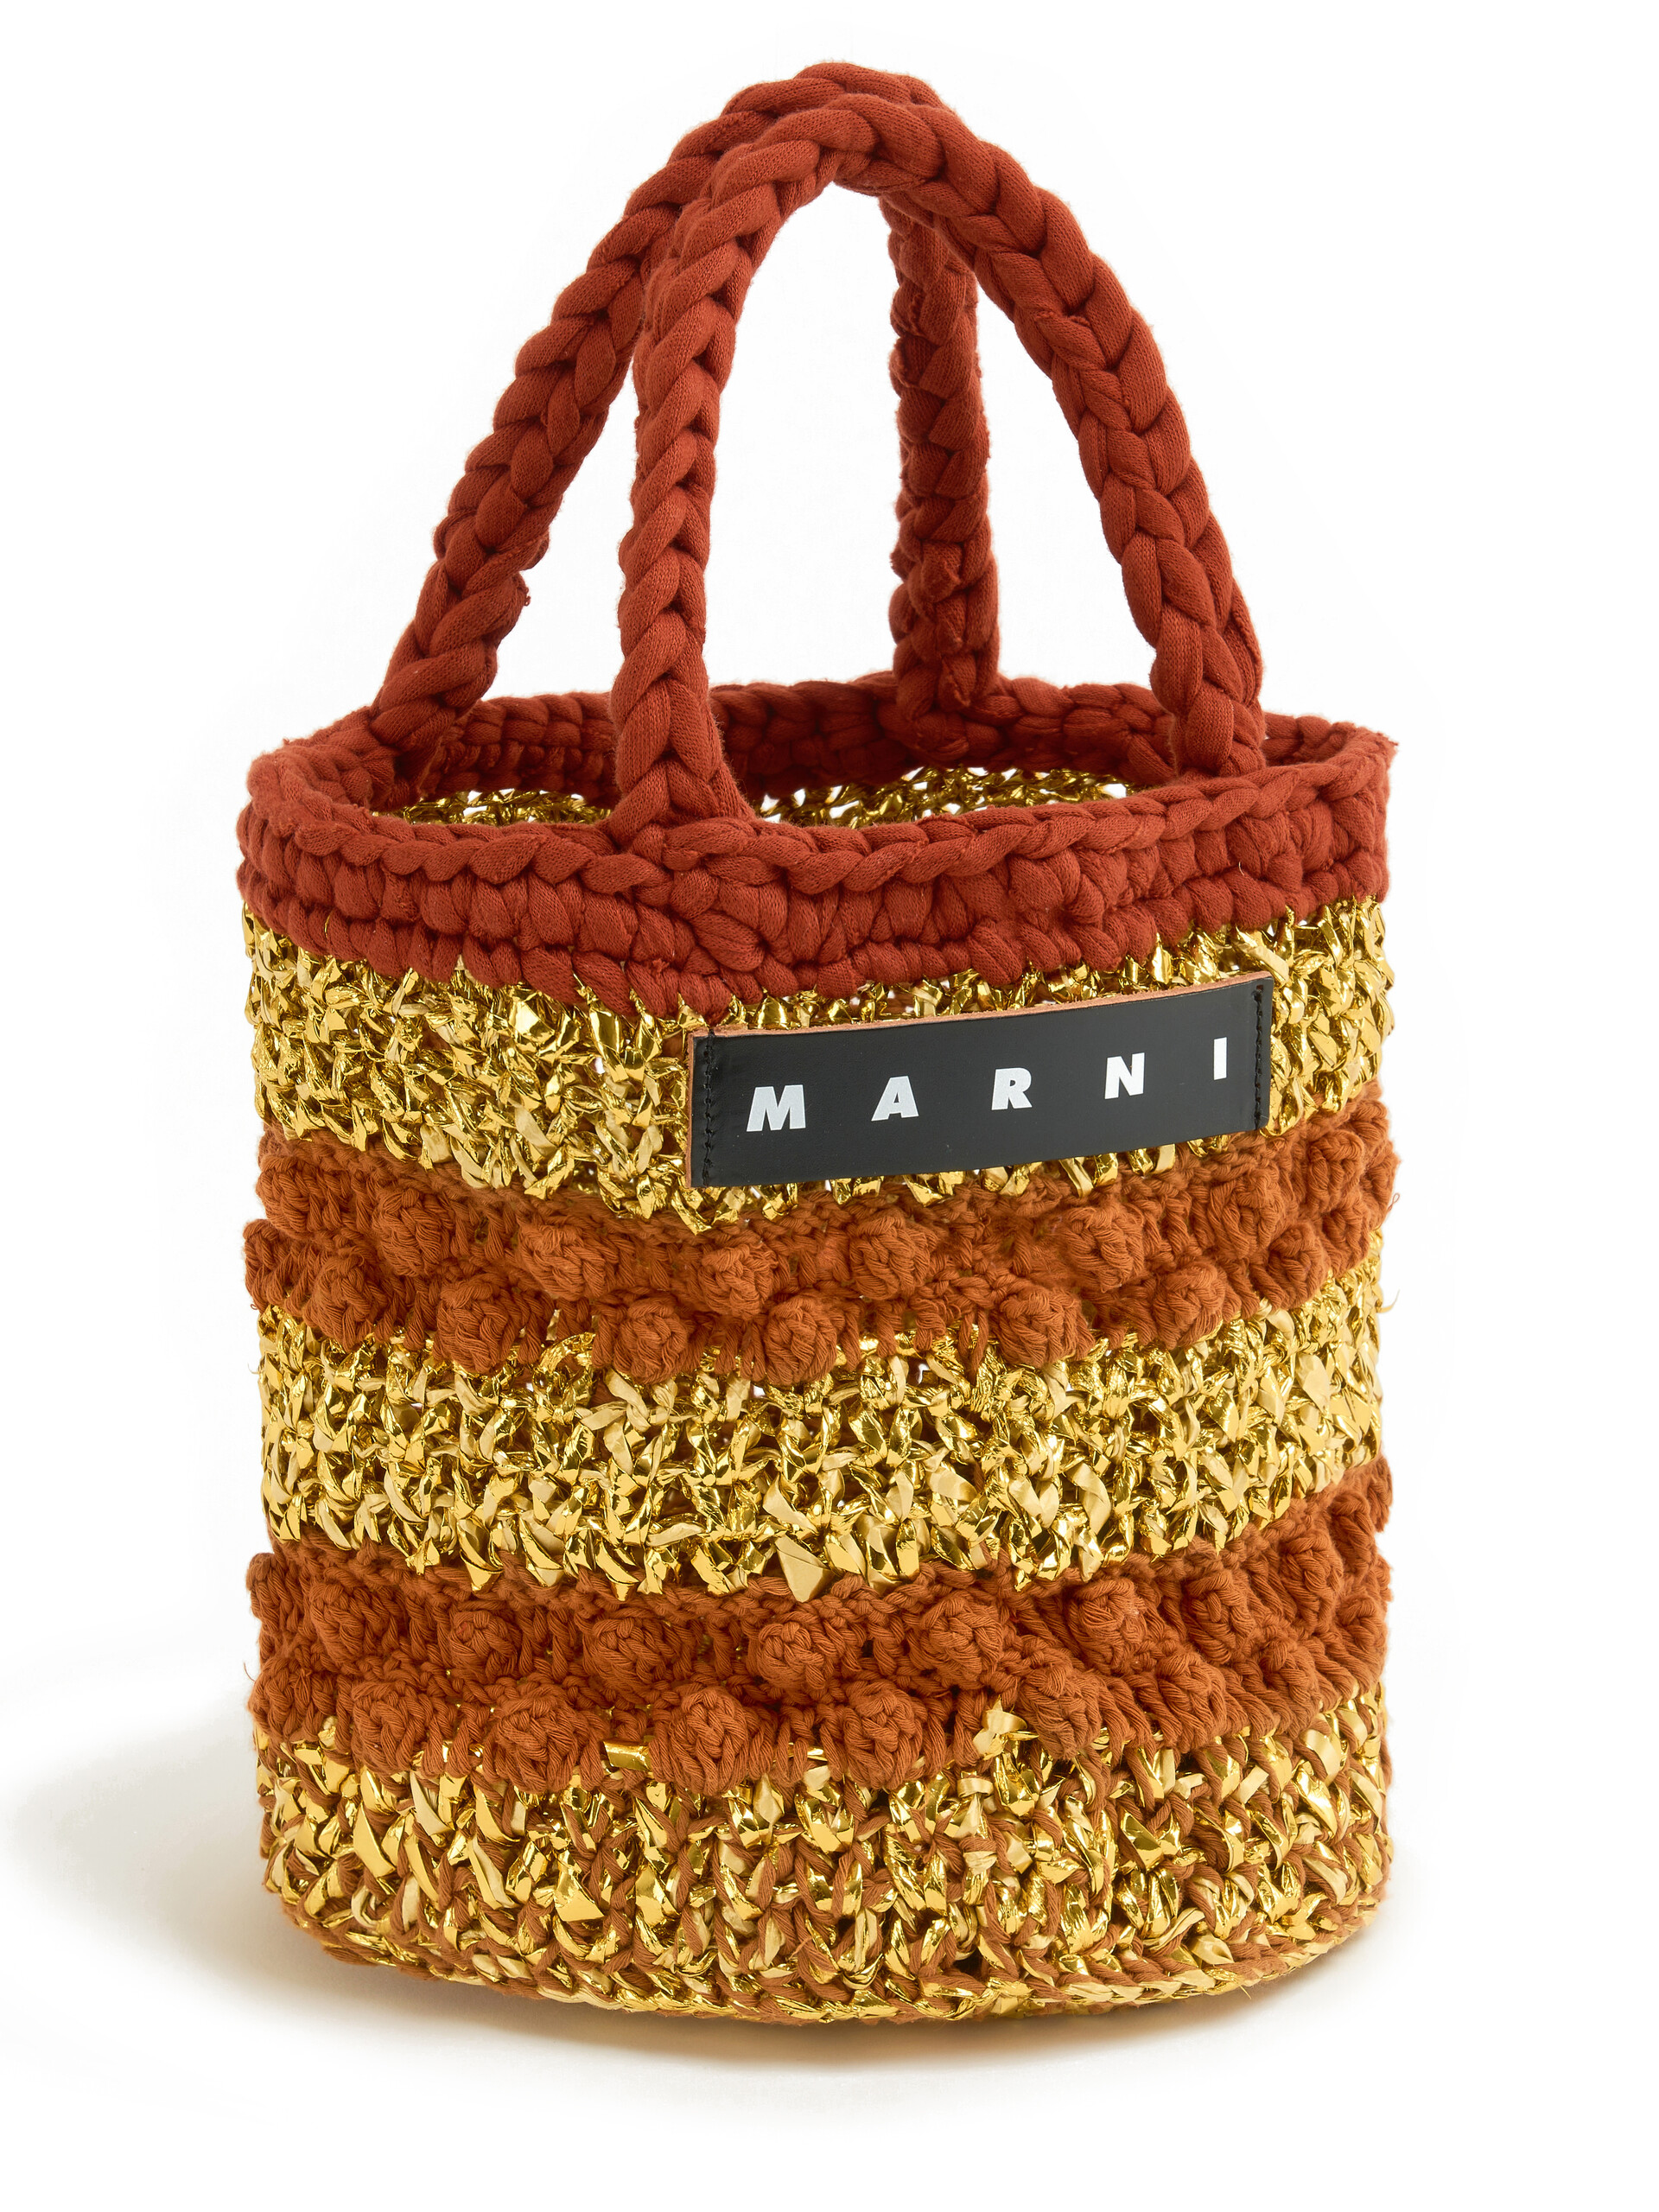 Deep blue and silver bobble-knit MARNI MARKET BUCKET bag - Shopping Bags - Image 4